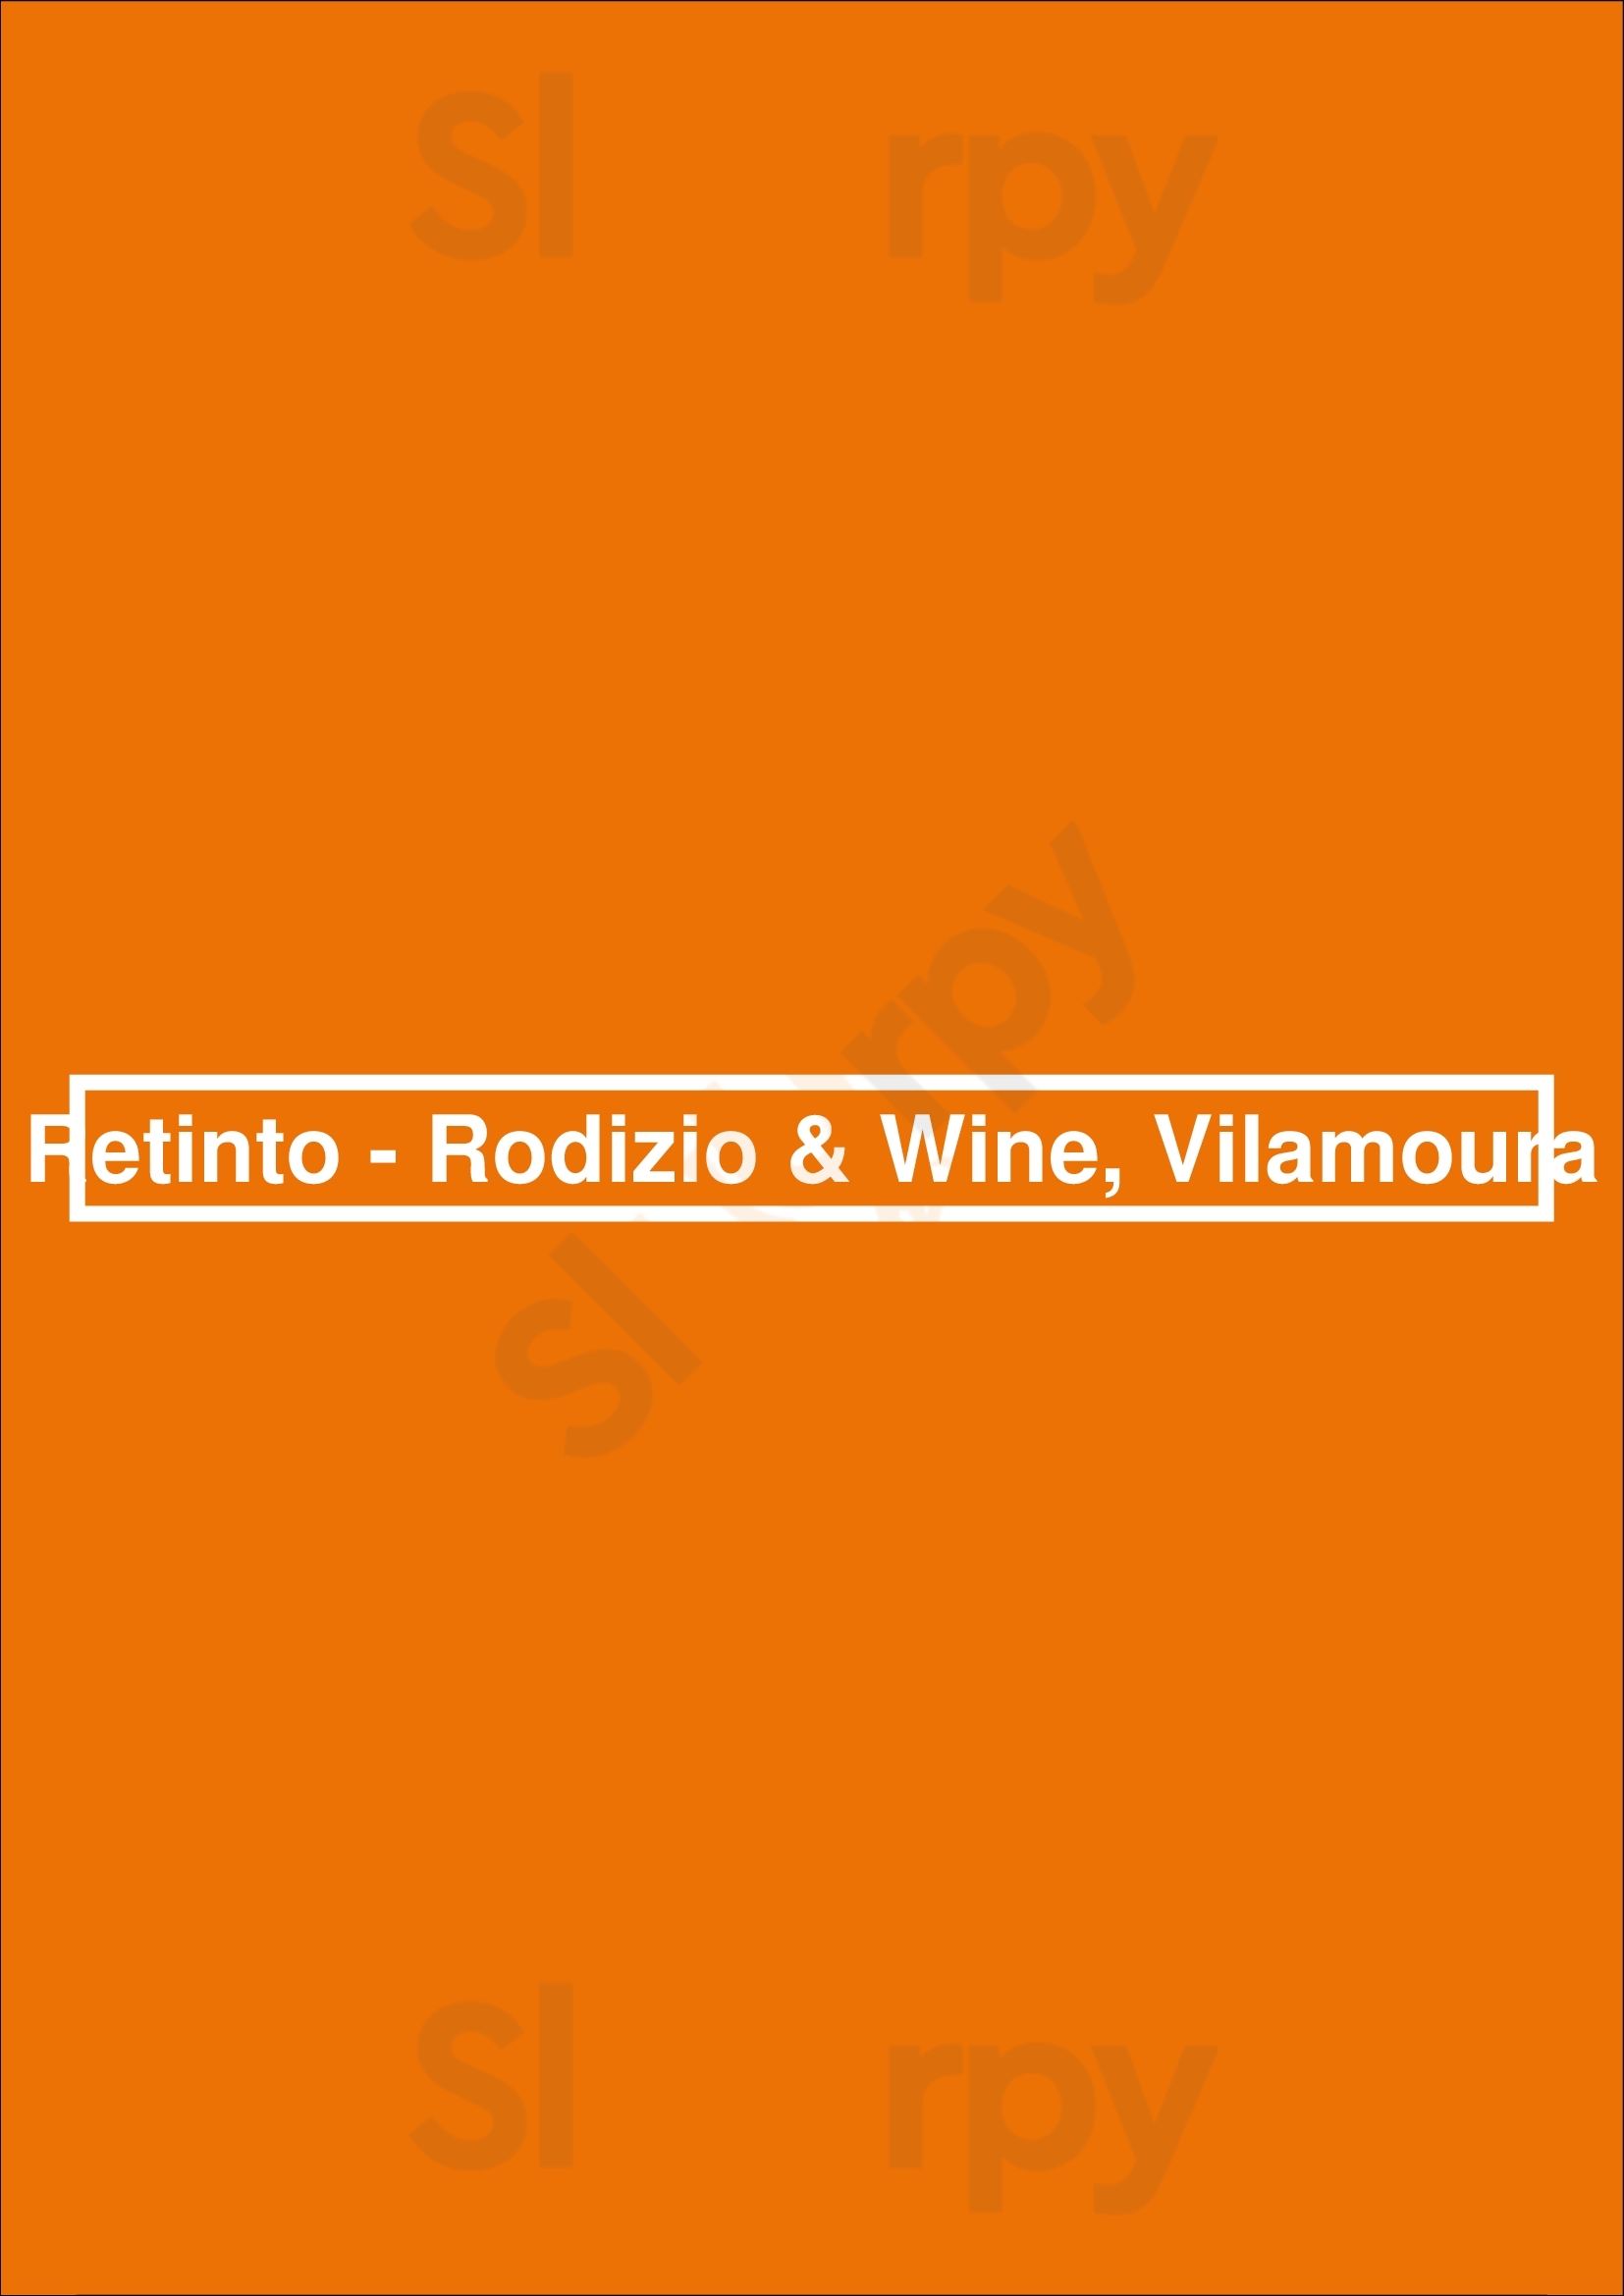 Retinto - Rodizio & Wine Vilamoura  Menu - 1